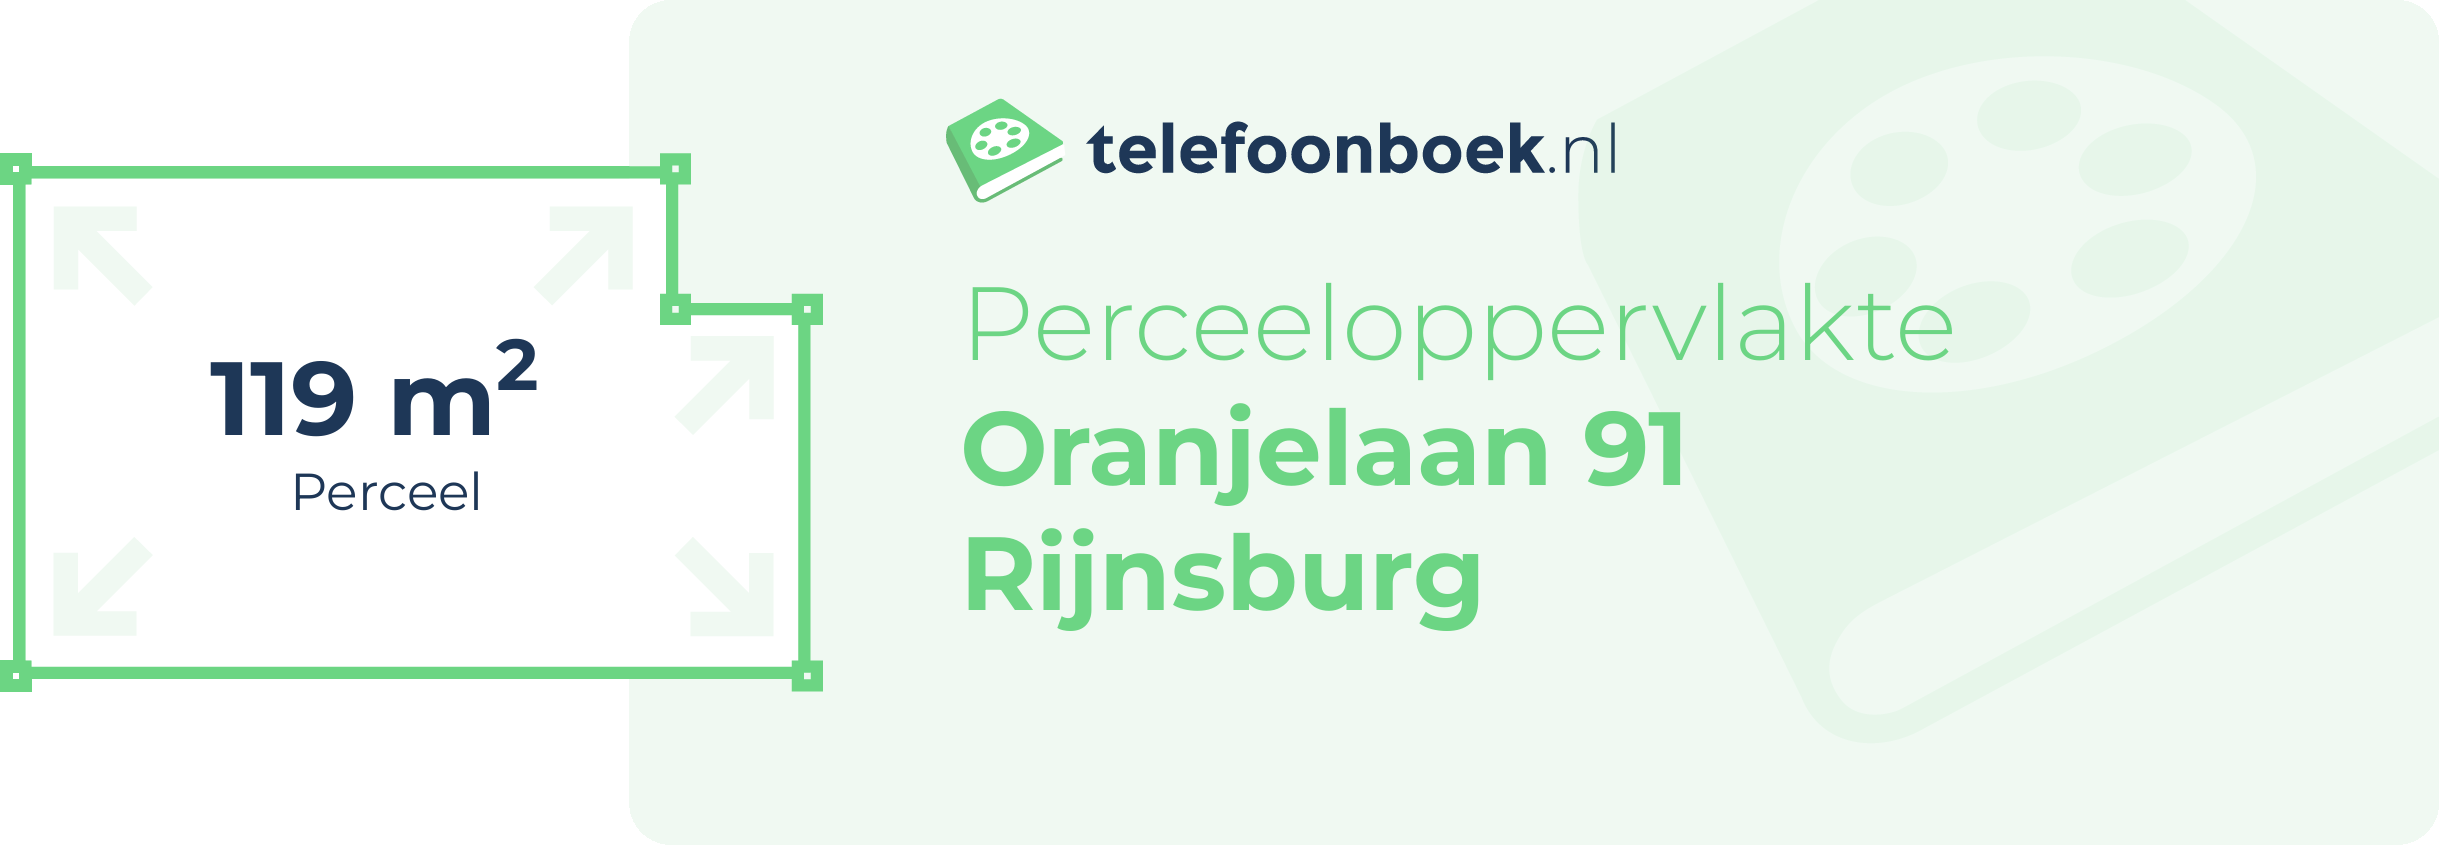 Perceeloppervlakte Oranjelaan 91 Rijnsburg